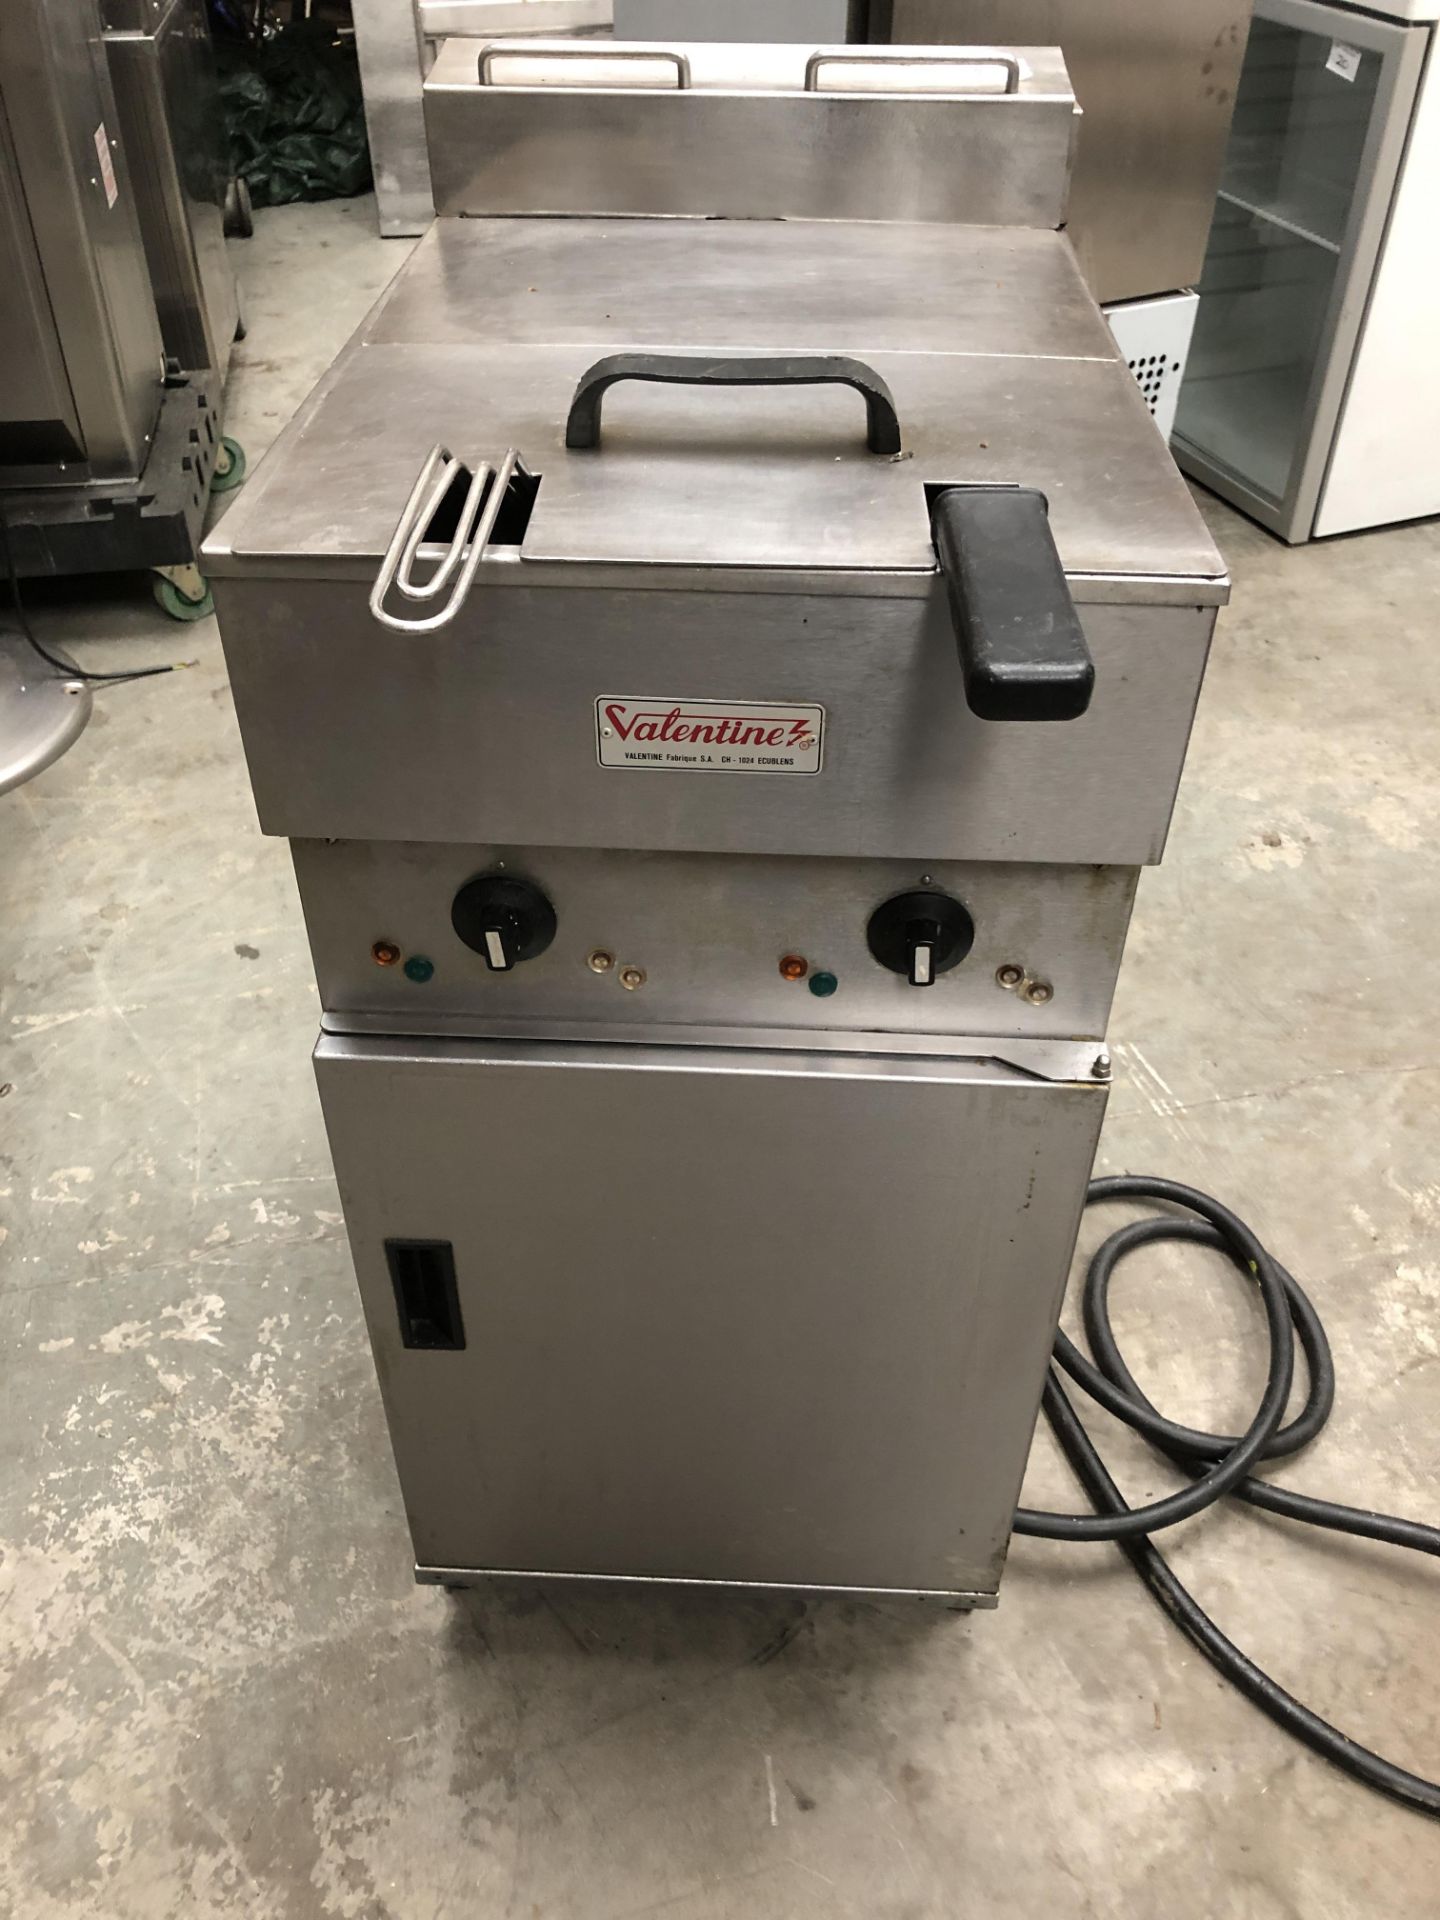 Valantine Double Tank Electric Fryer